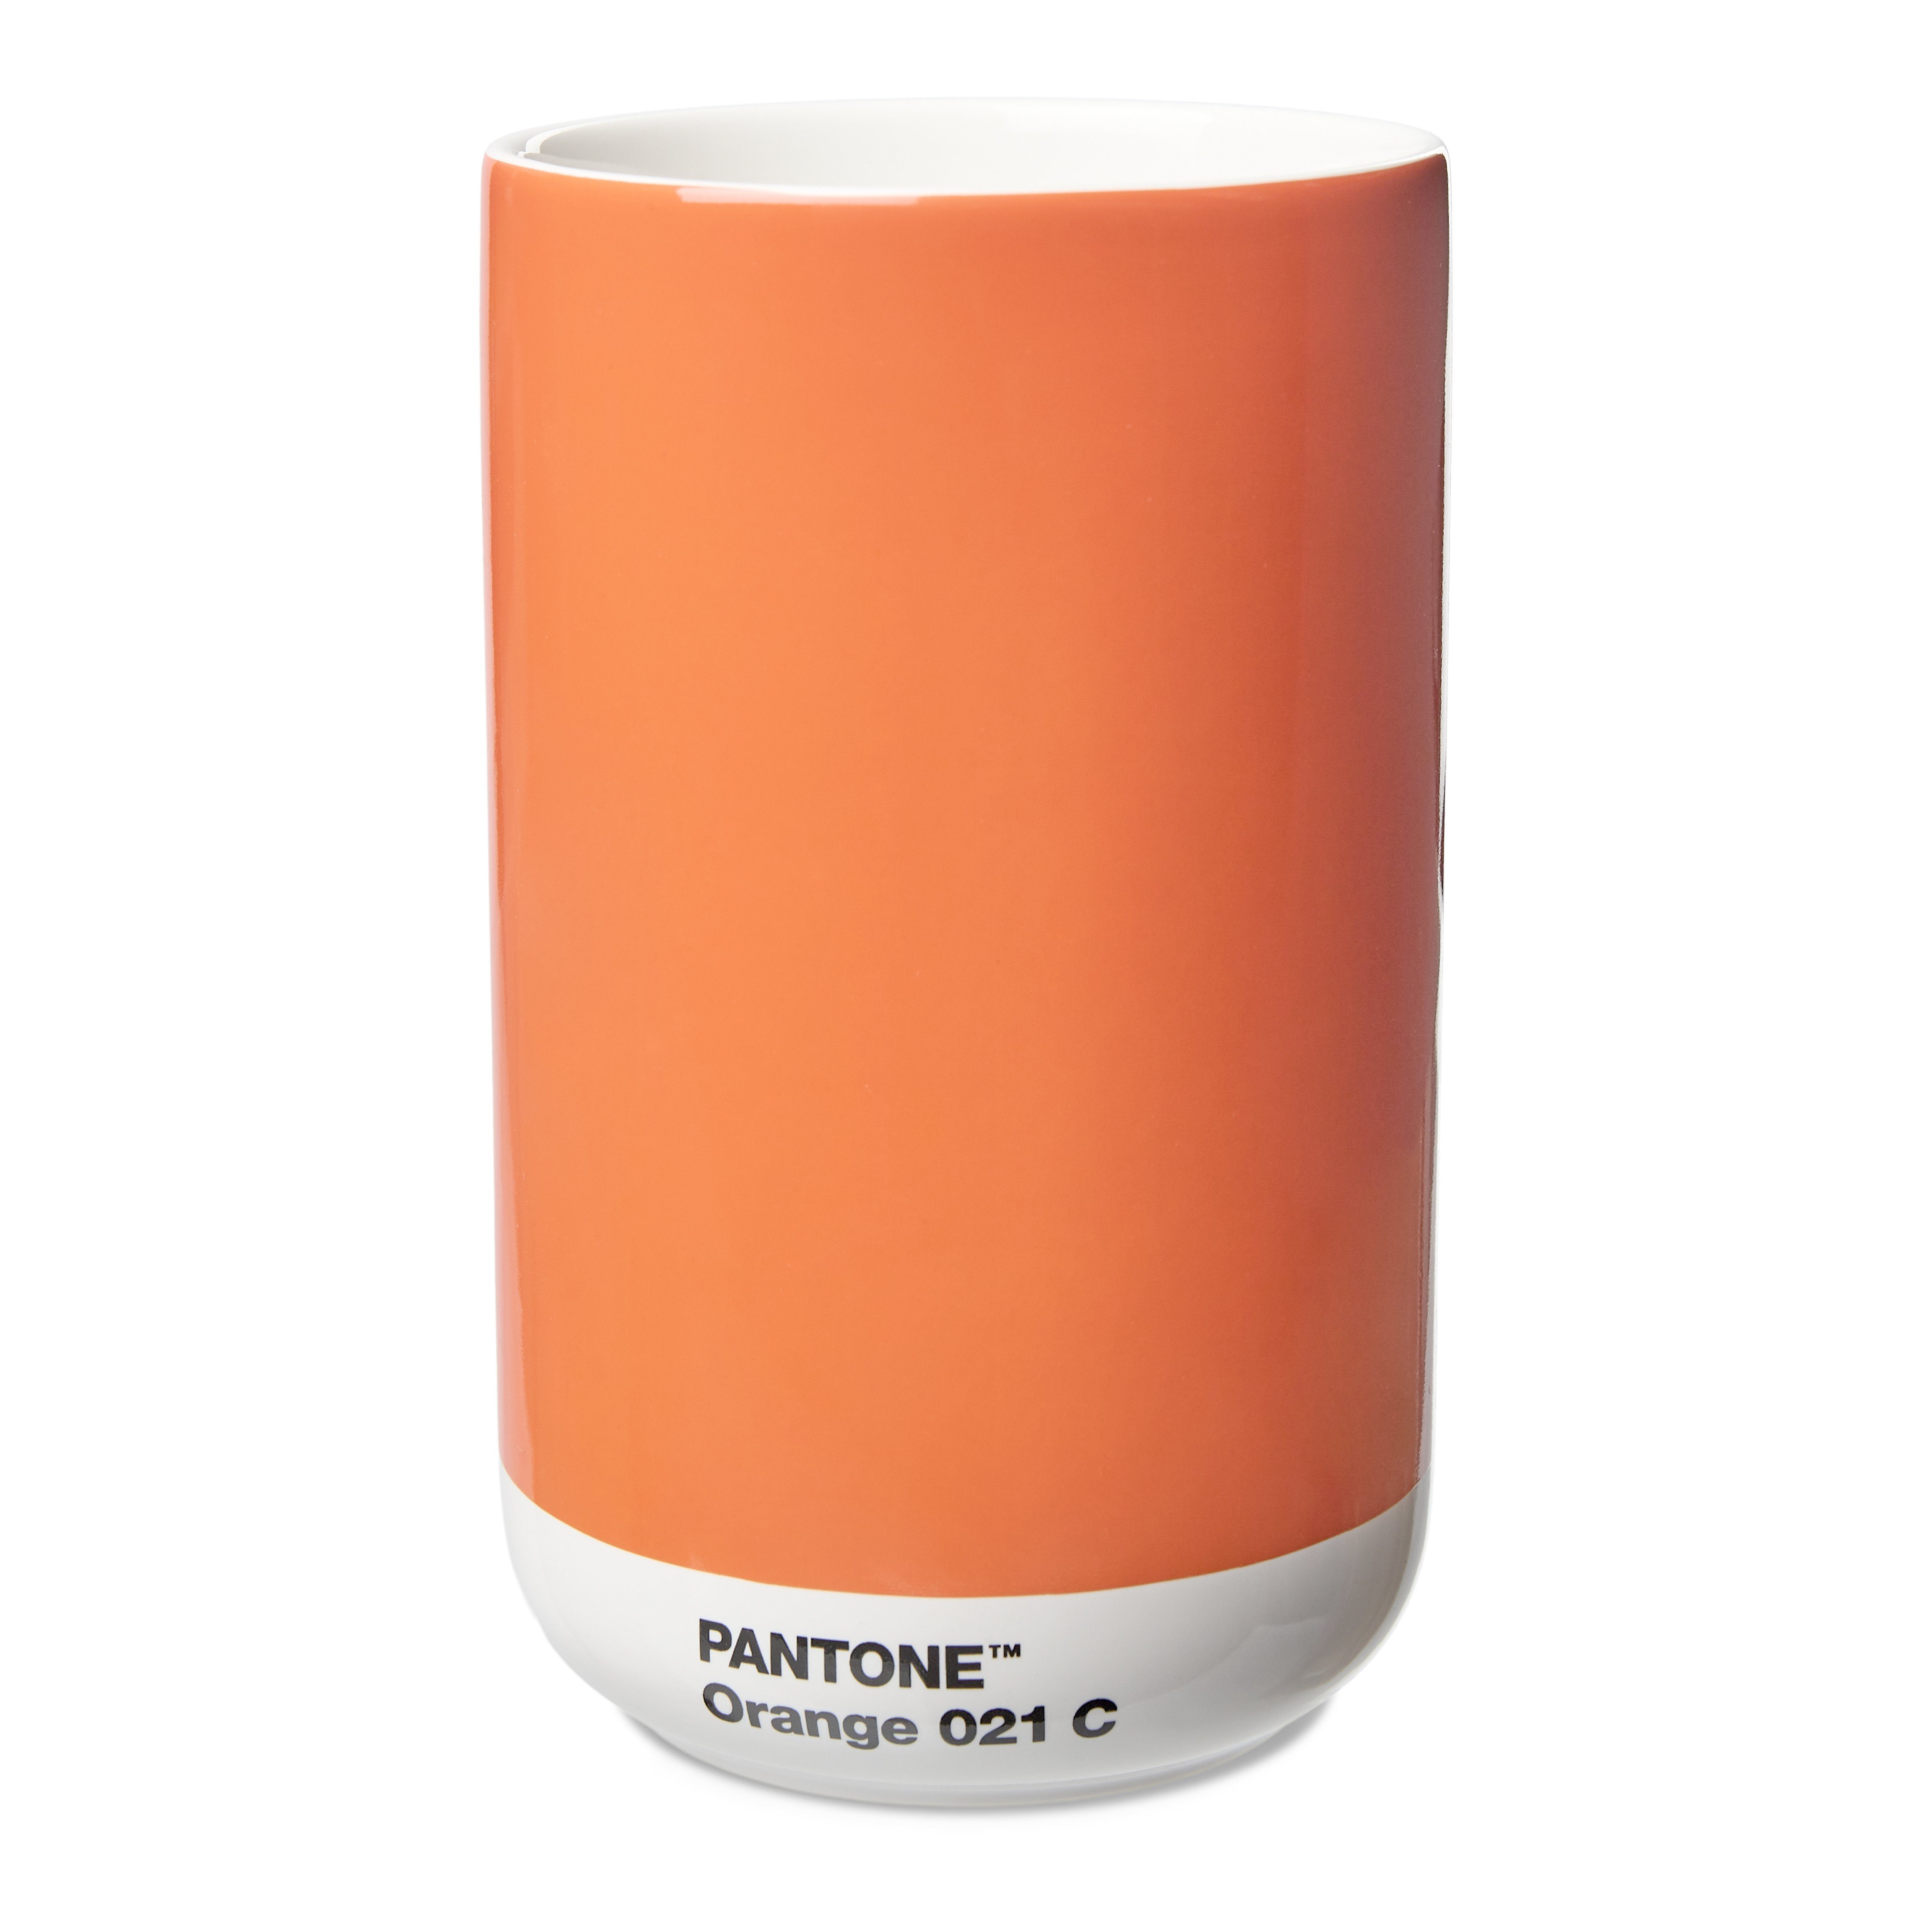 PANTONE Dekovase Mini Porzellan Vase, in Geschenkbox, 500ml Orange 021C